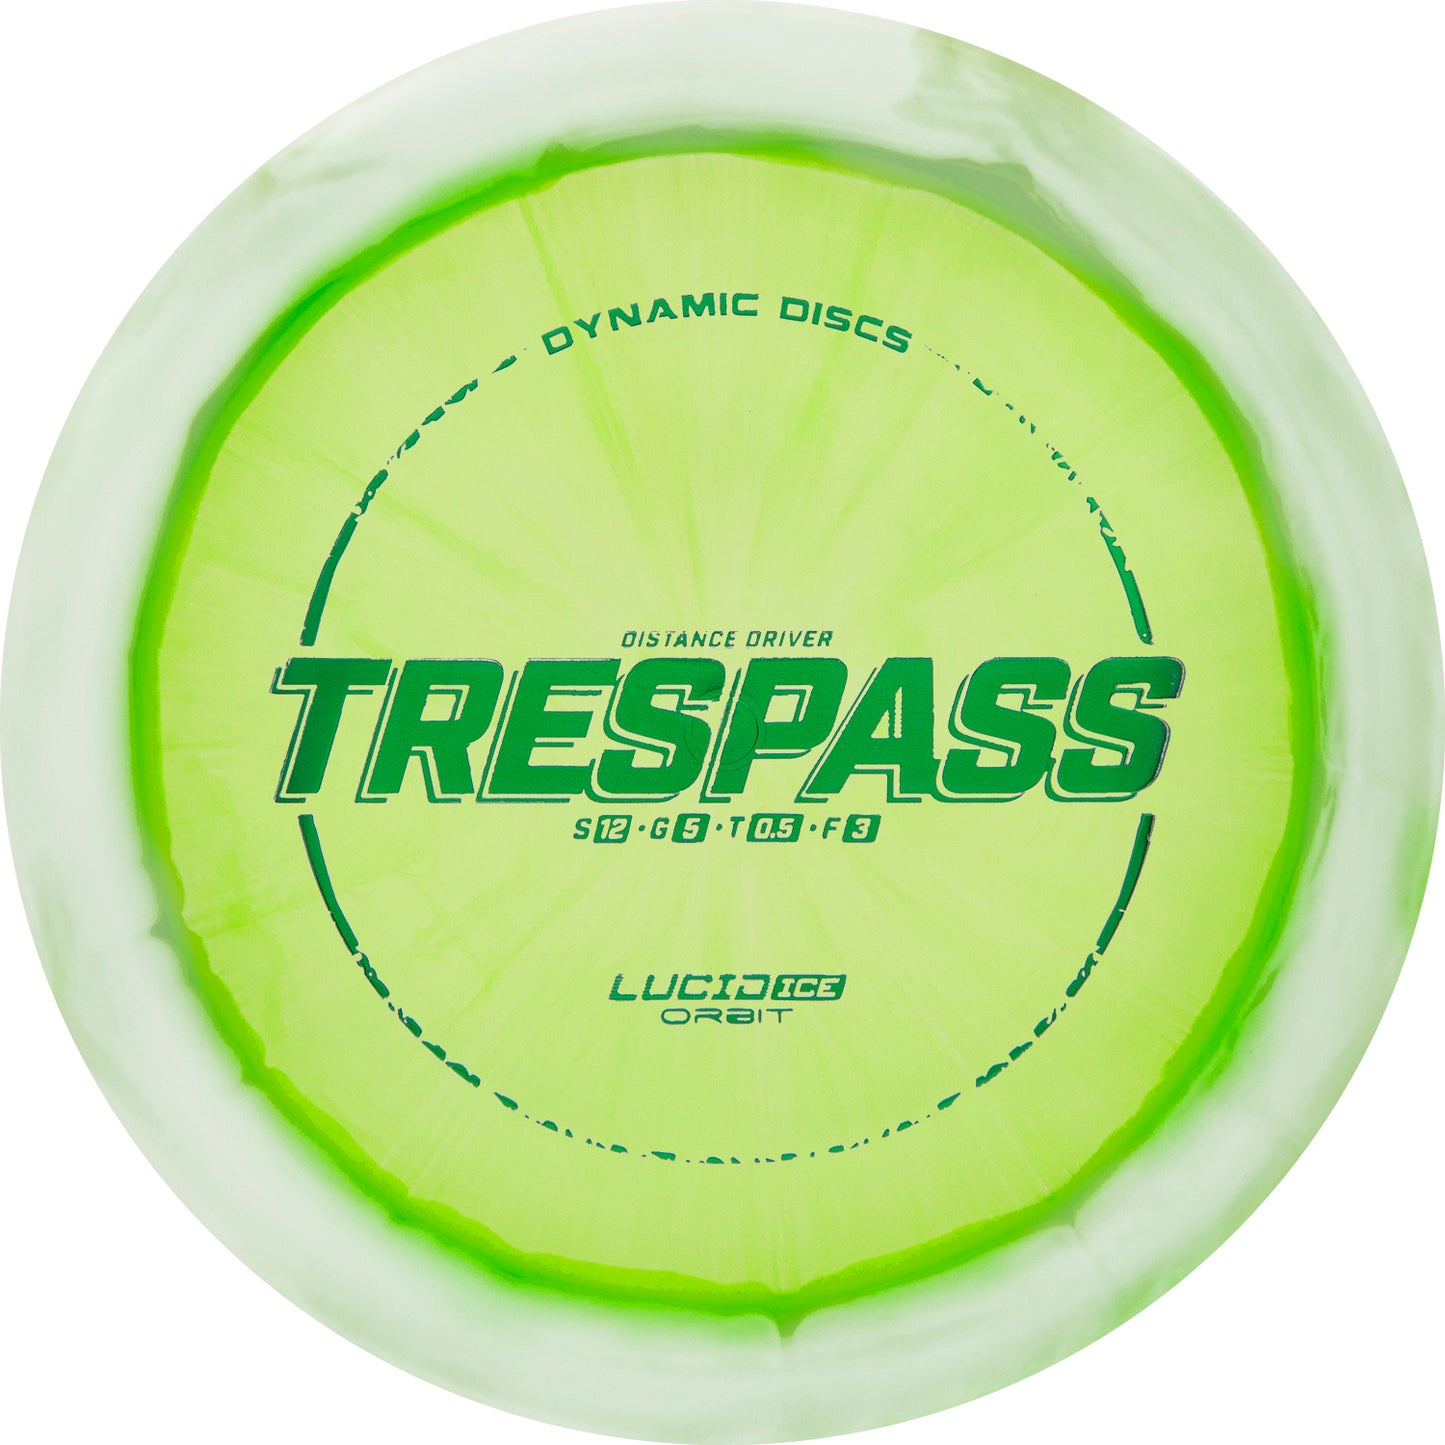 Dynamic Discs Lucid-Ice Orbit Trespass